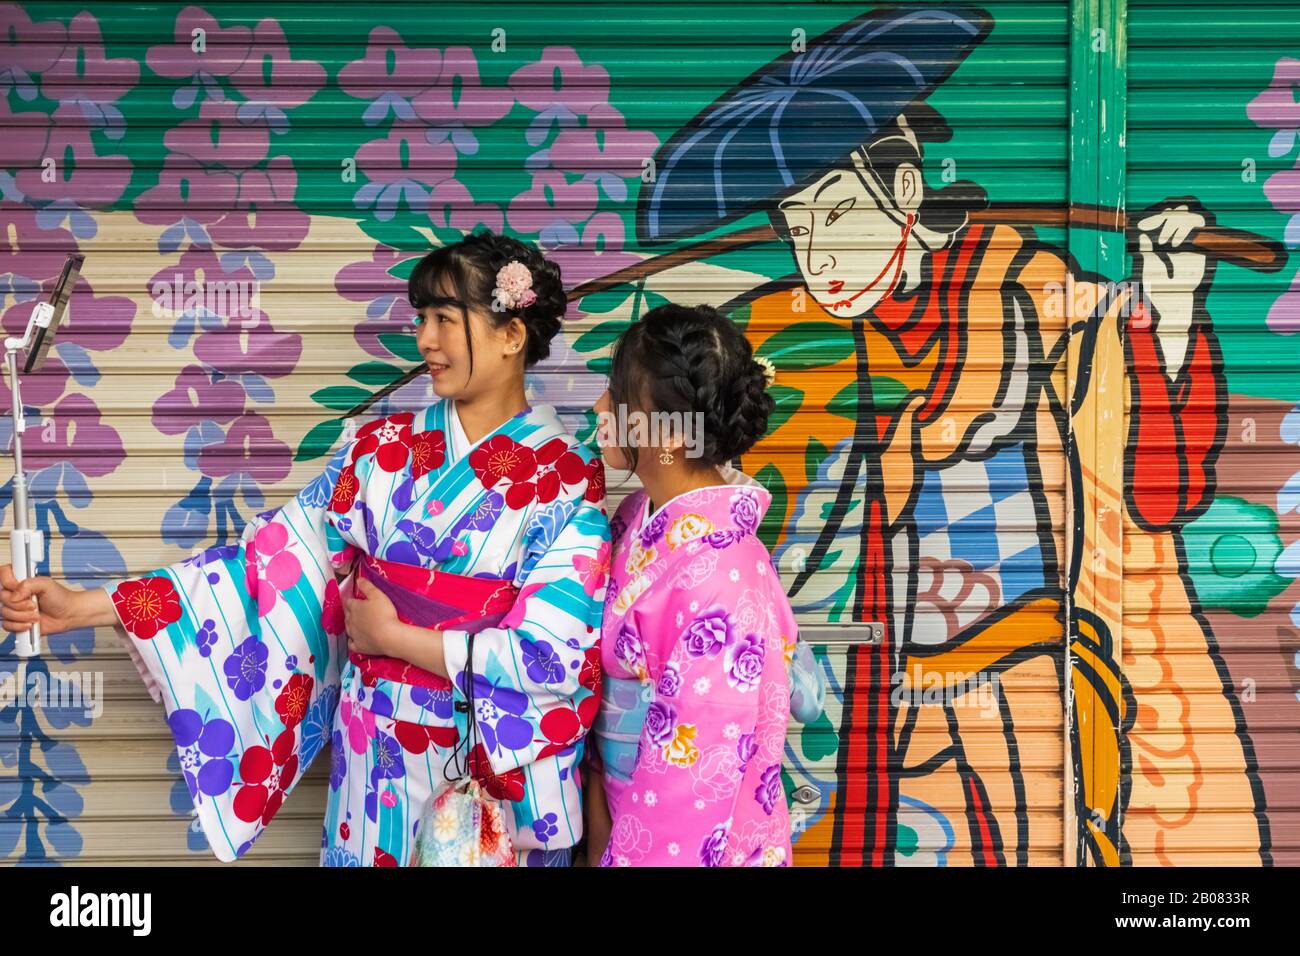 Japan, Honshu, Tokyo, Asakusa, Two Women in Kimono Taking Selfie Photos in front of Colourful Store Shutter Painting Stock Photo